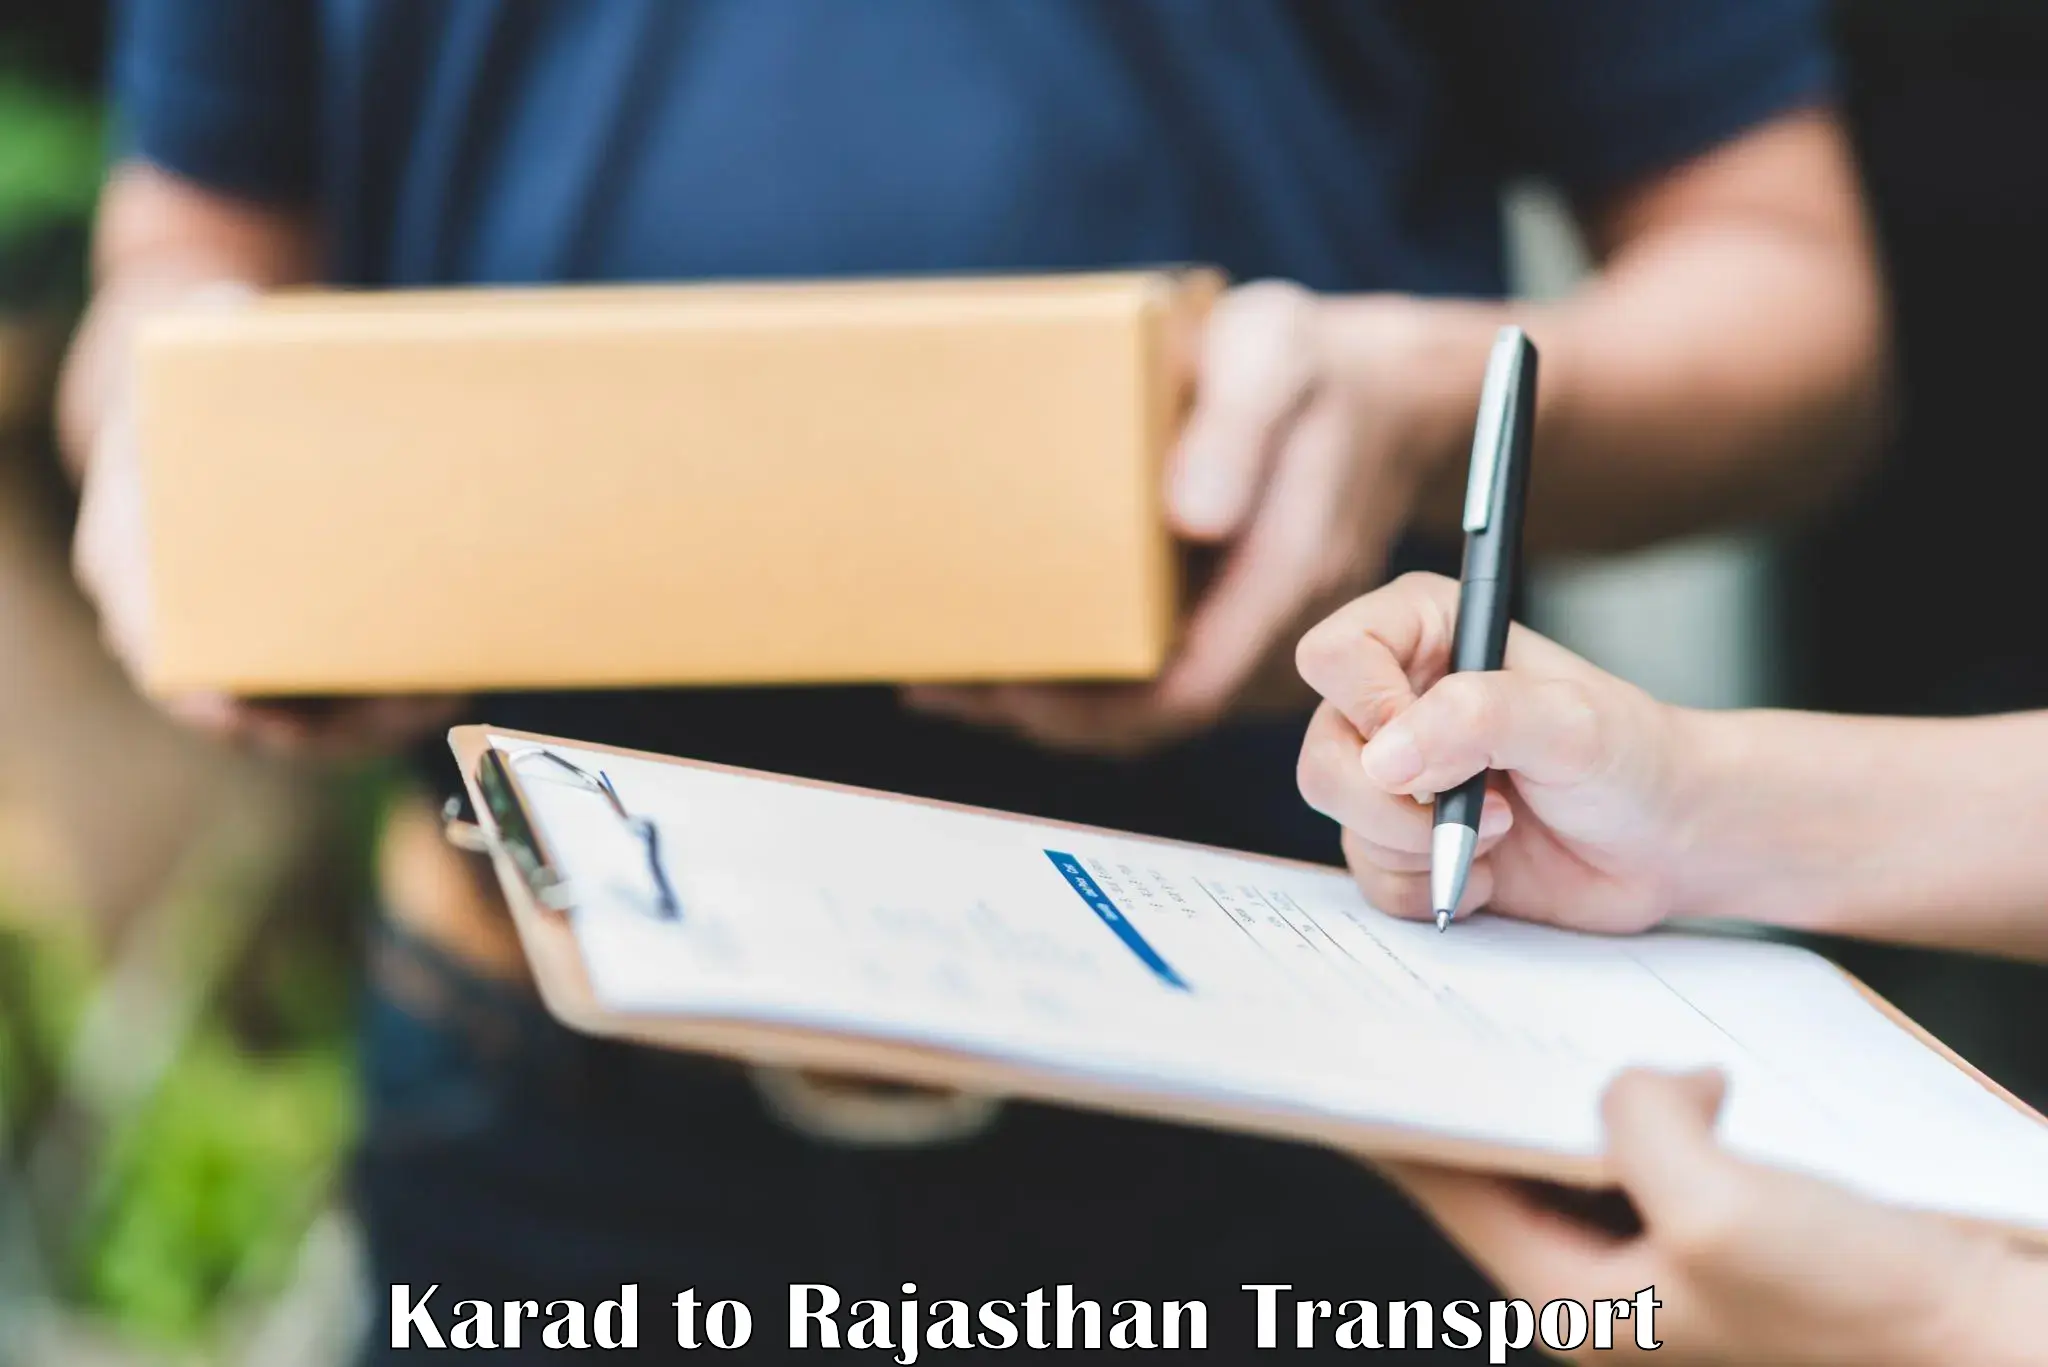 Shipping partner Karad to Kekri